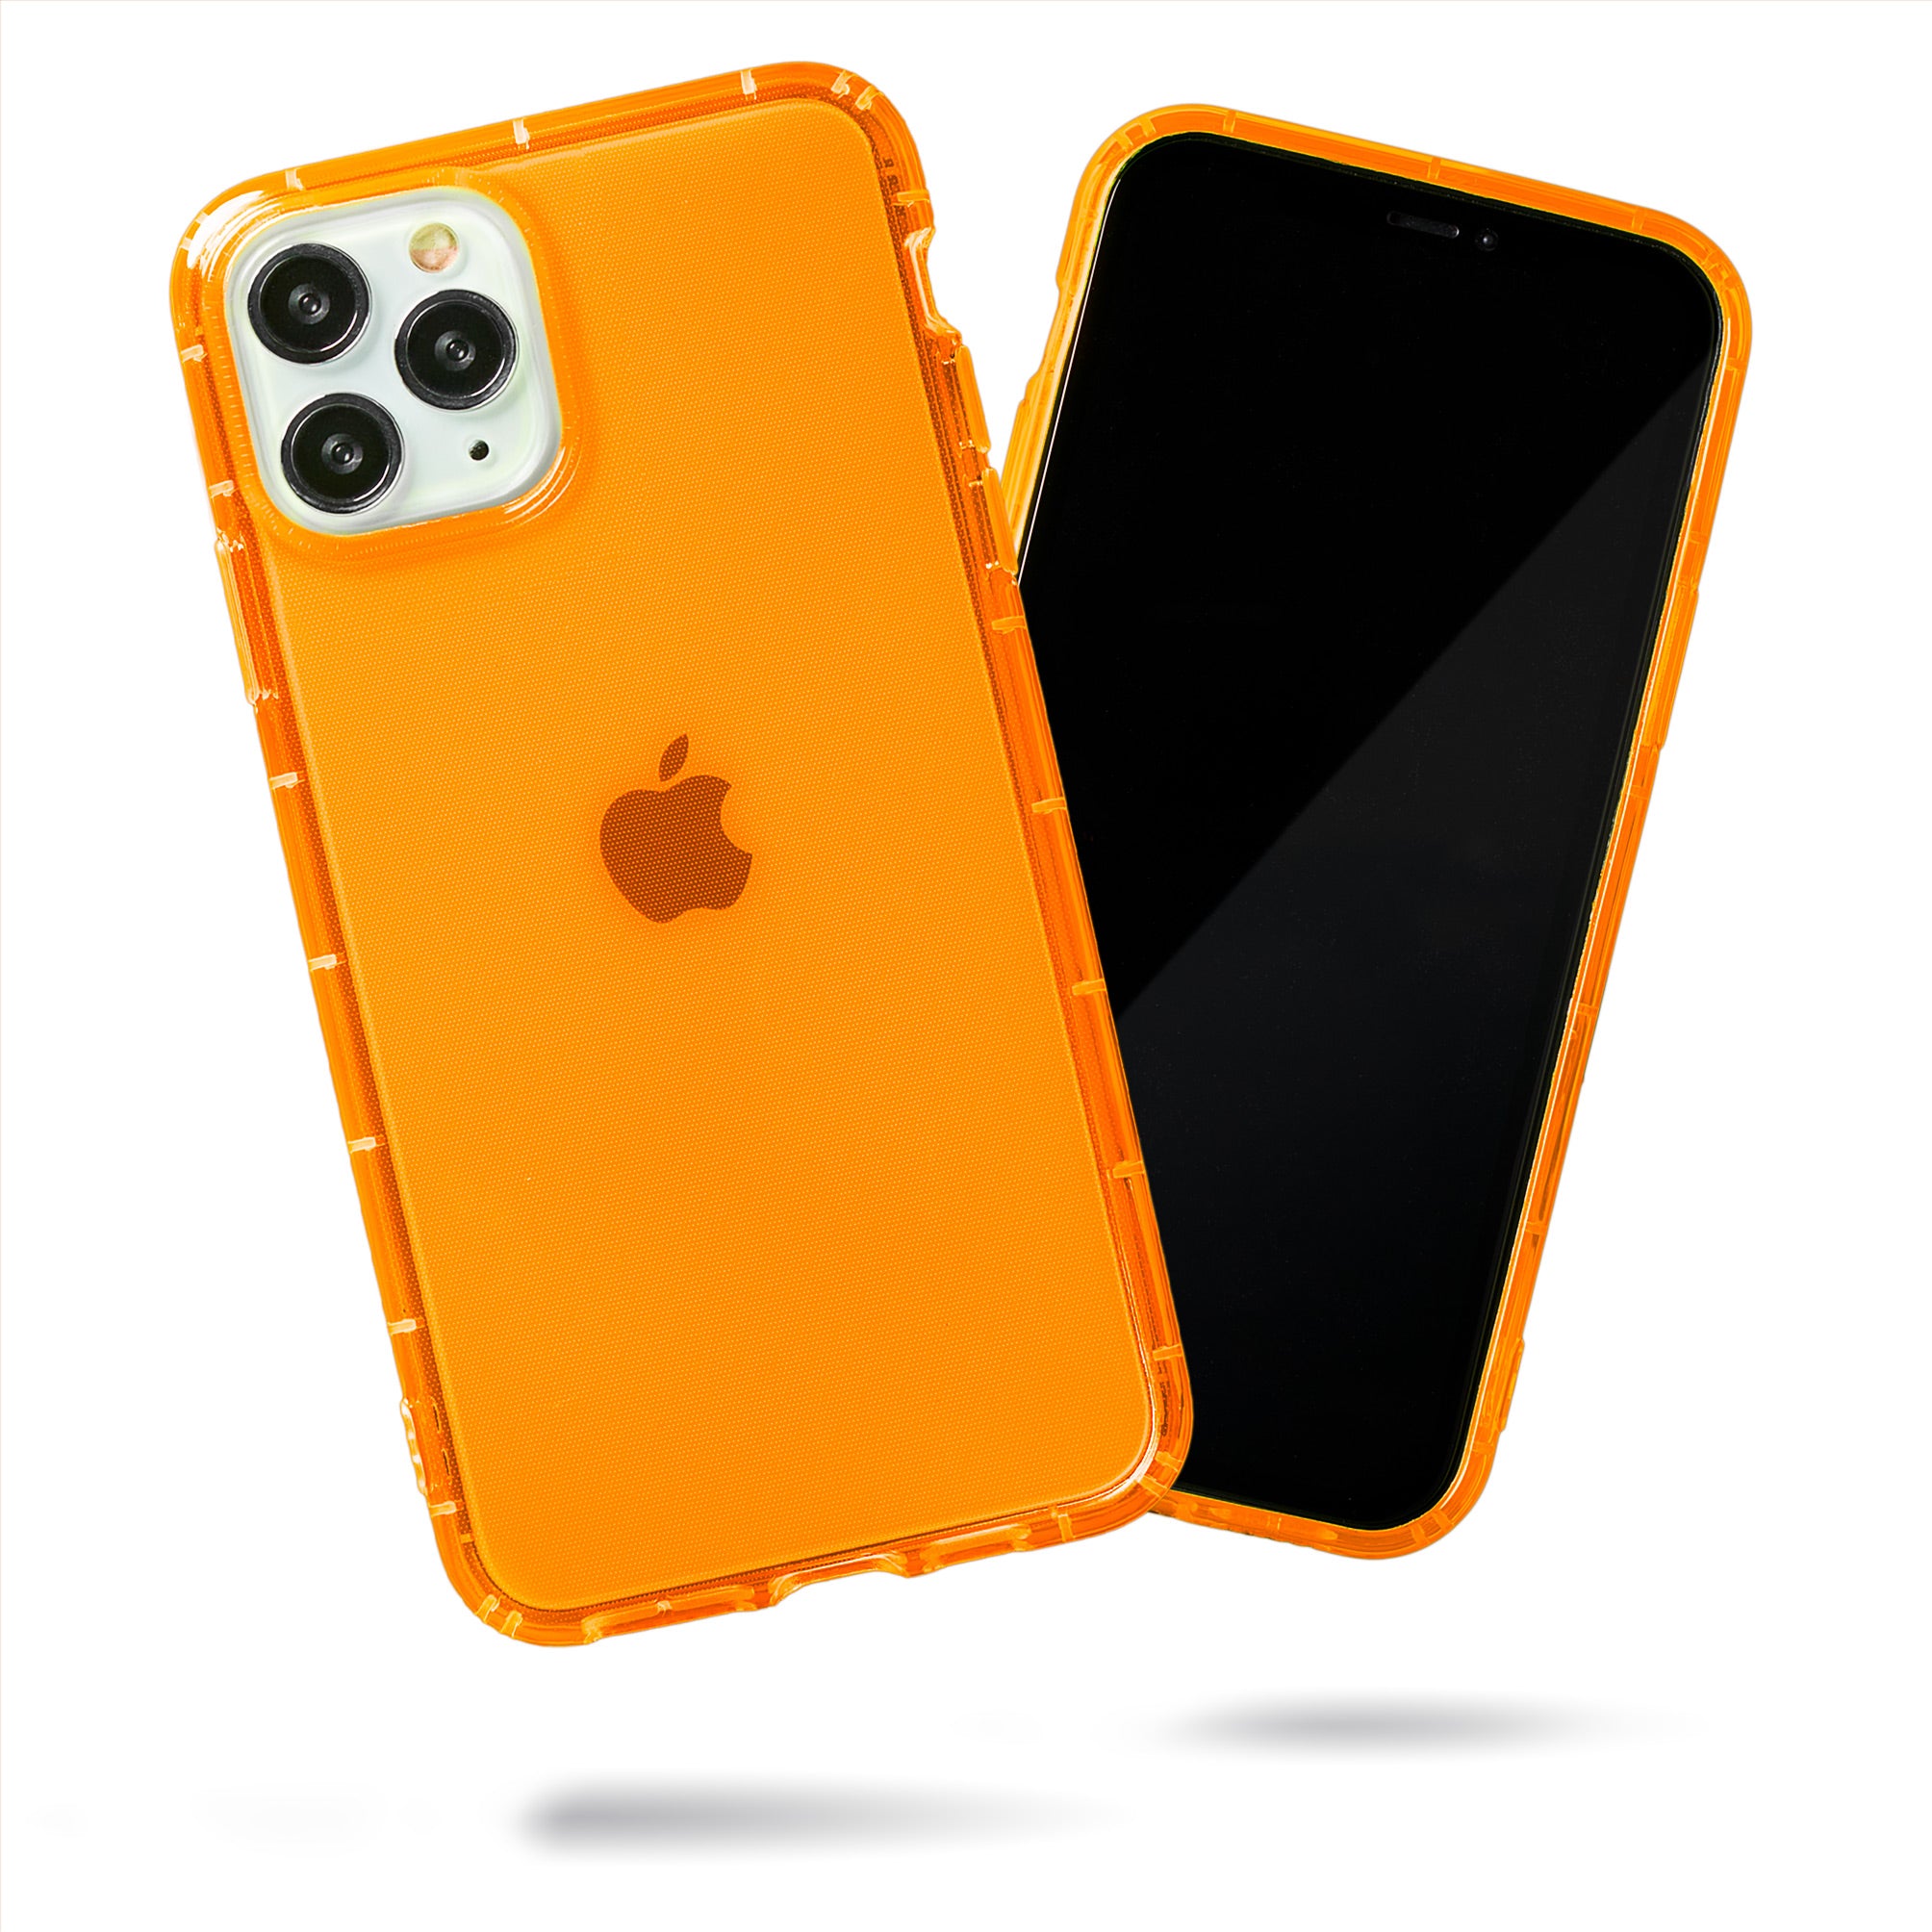 Highlighter Case for iPhone 11 Pro - Intense Bright Orange